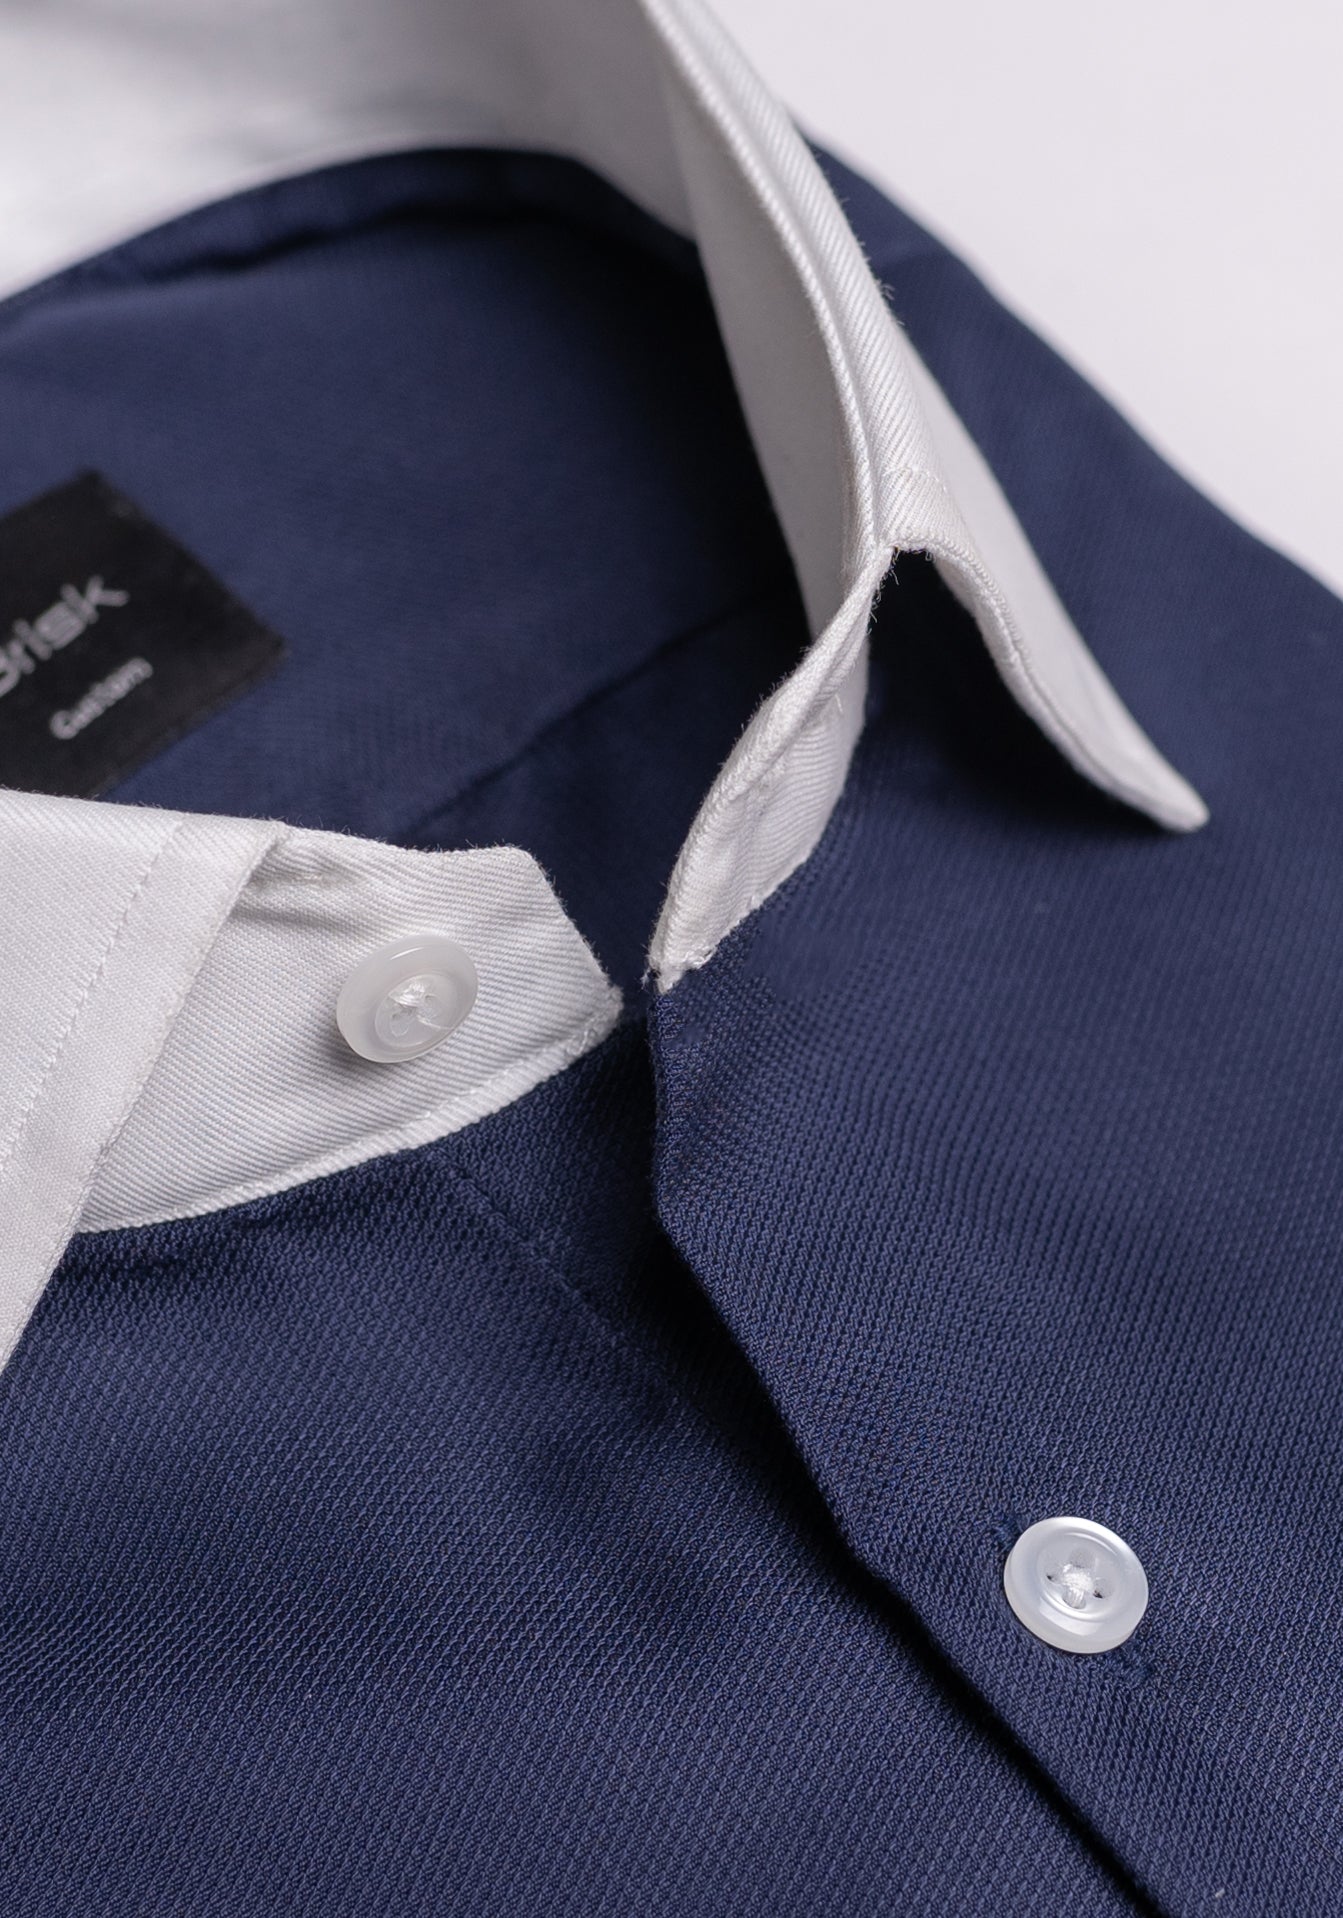 Egyptian Midnight Blue Royal Oxford Shirt - White Classic Collar - SALE